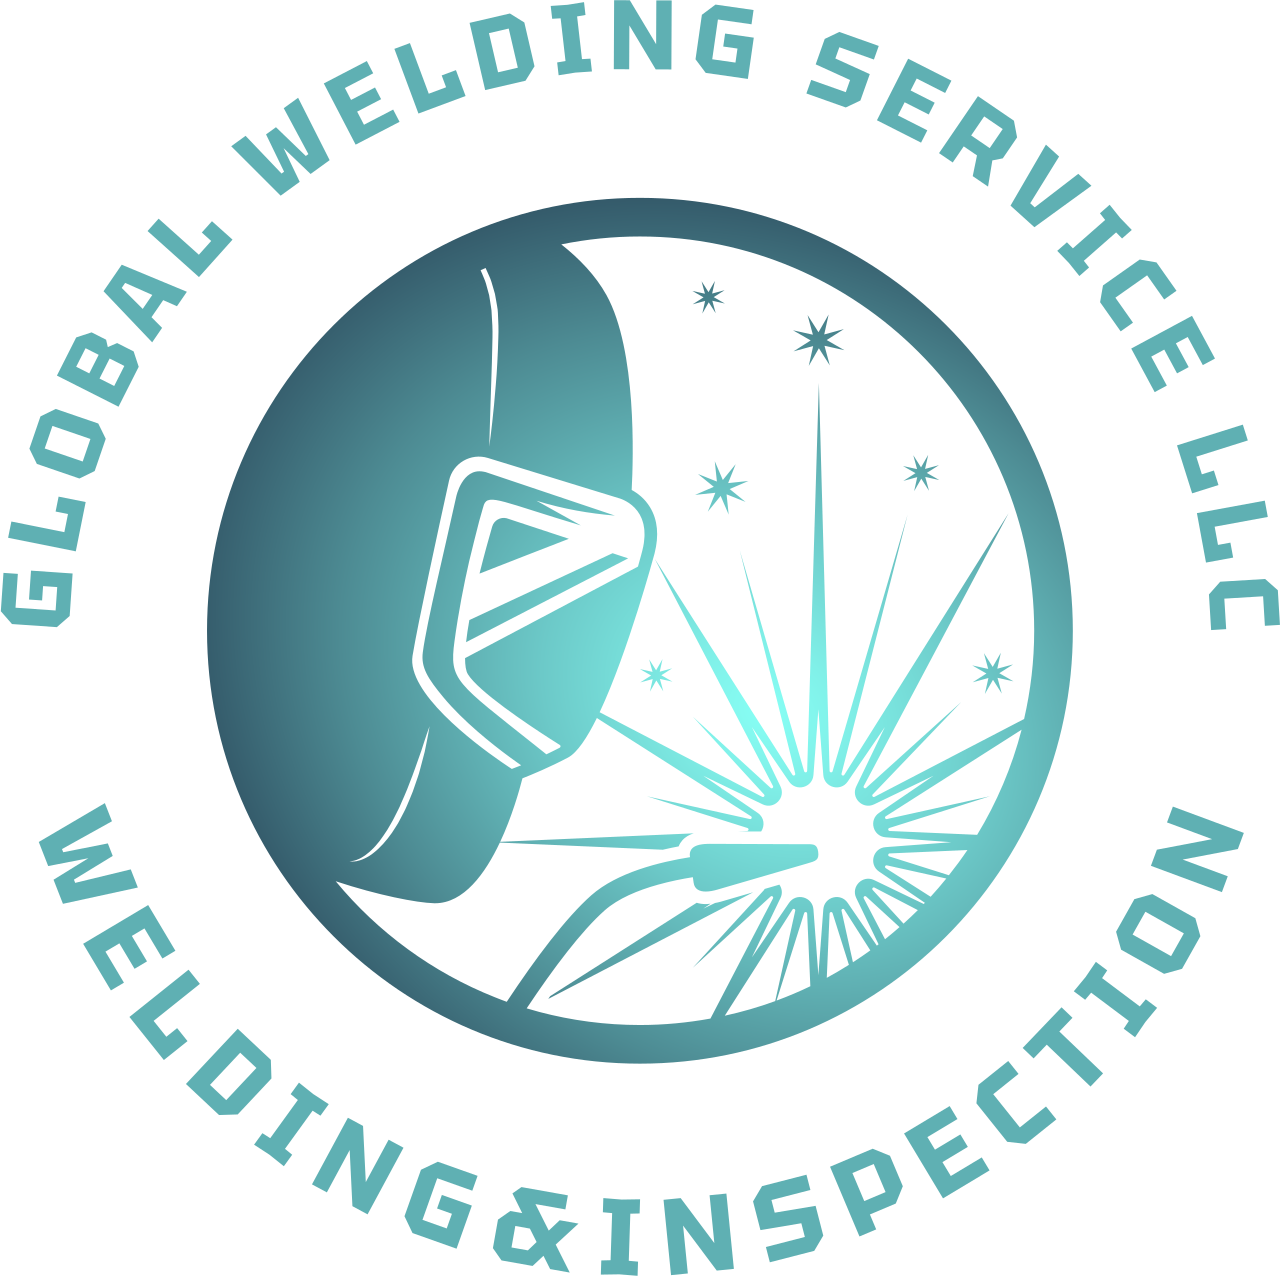 GLOBAL WELDING SERVICE LLC's web page